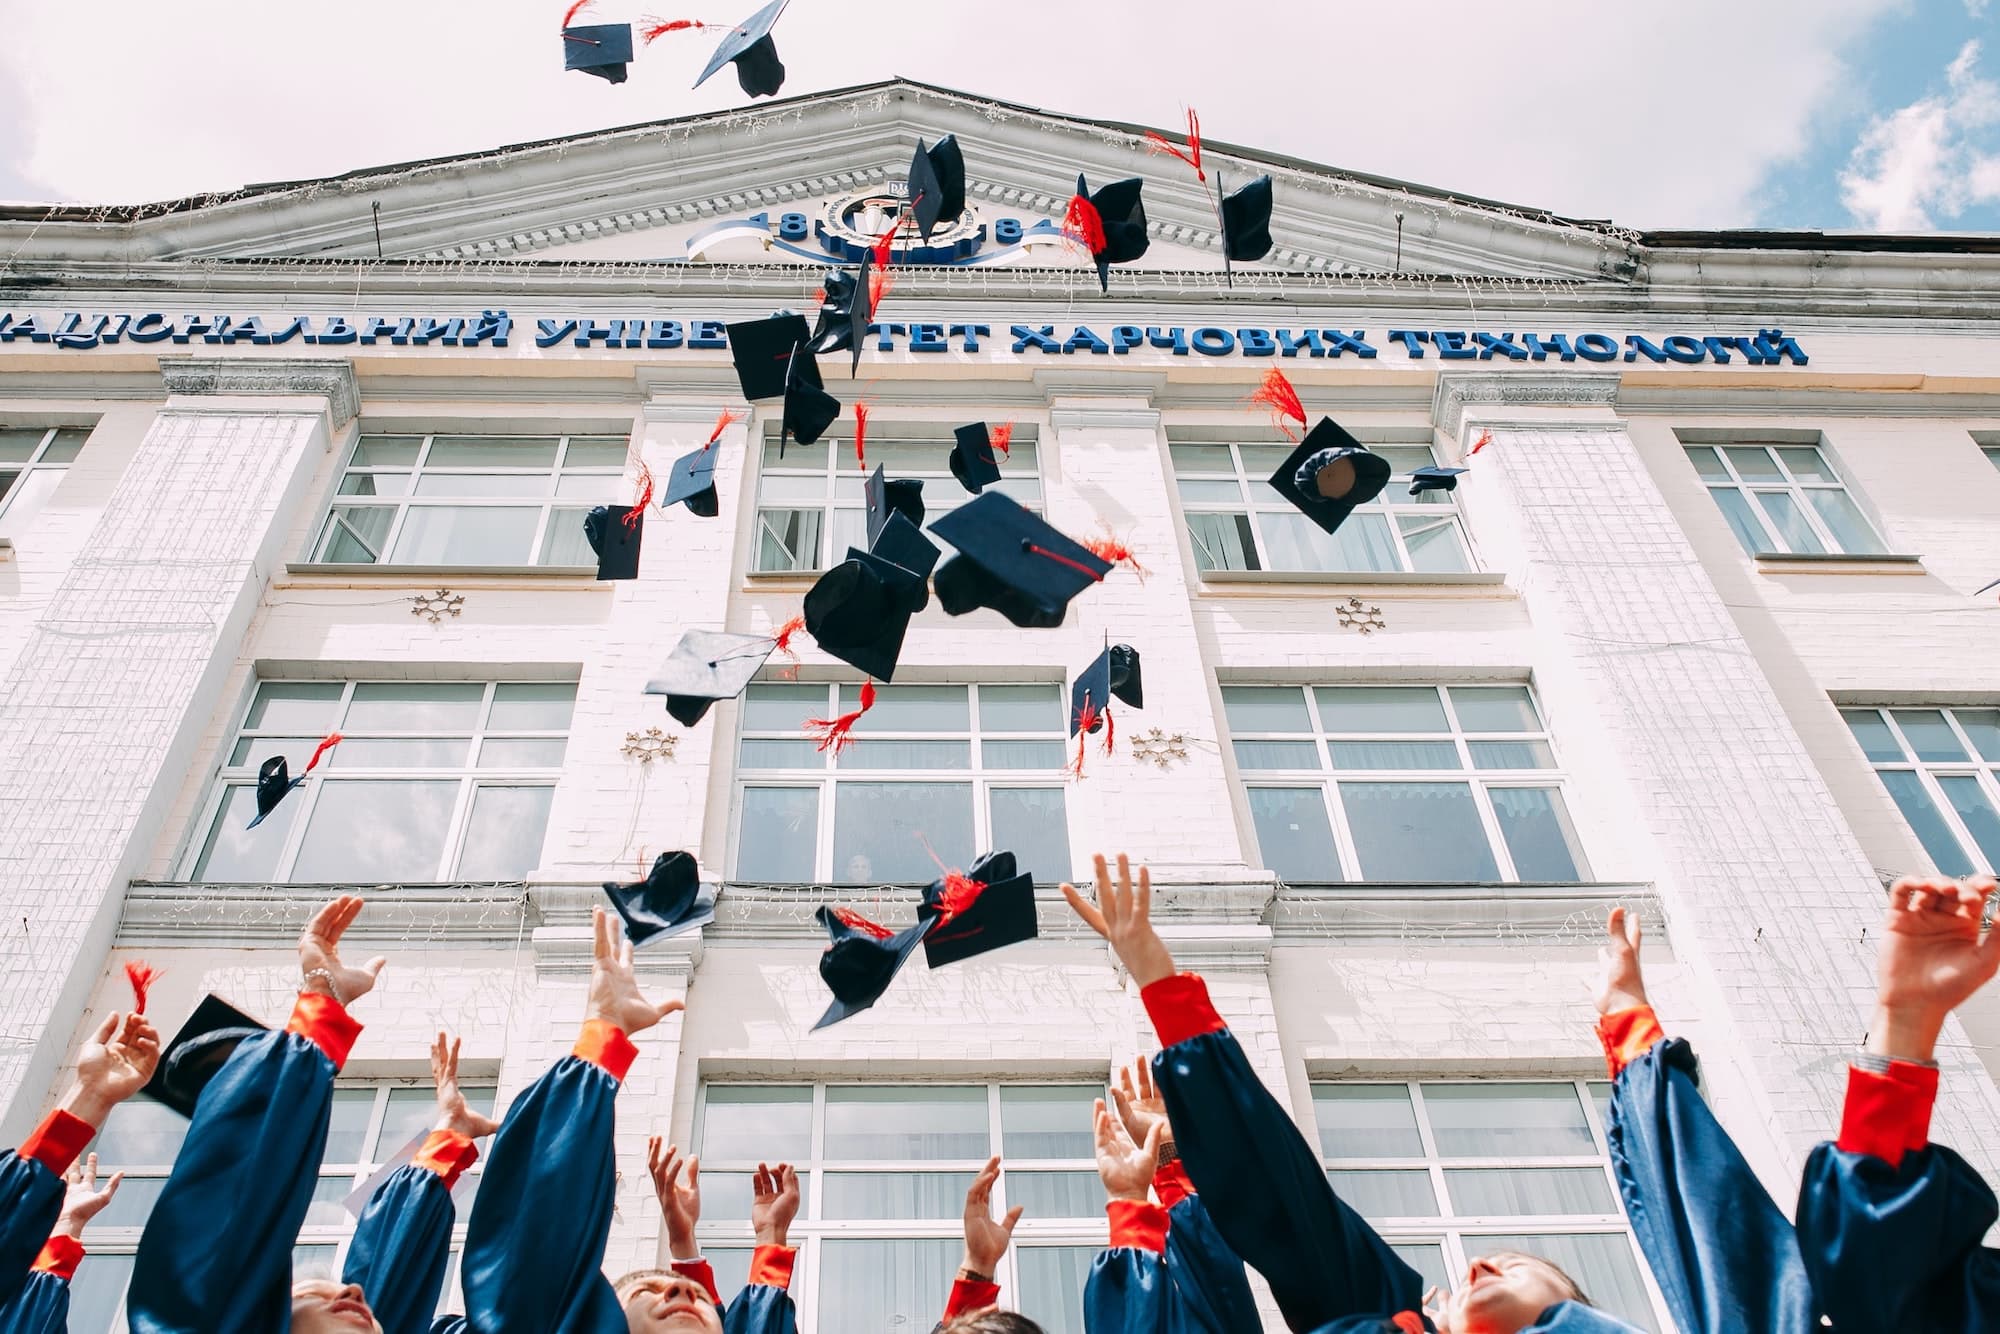 graduation hats thrown in the air